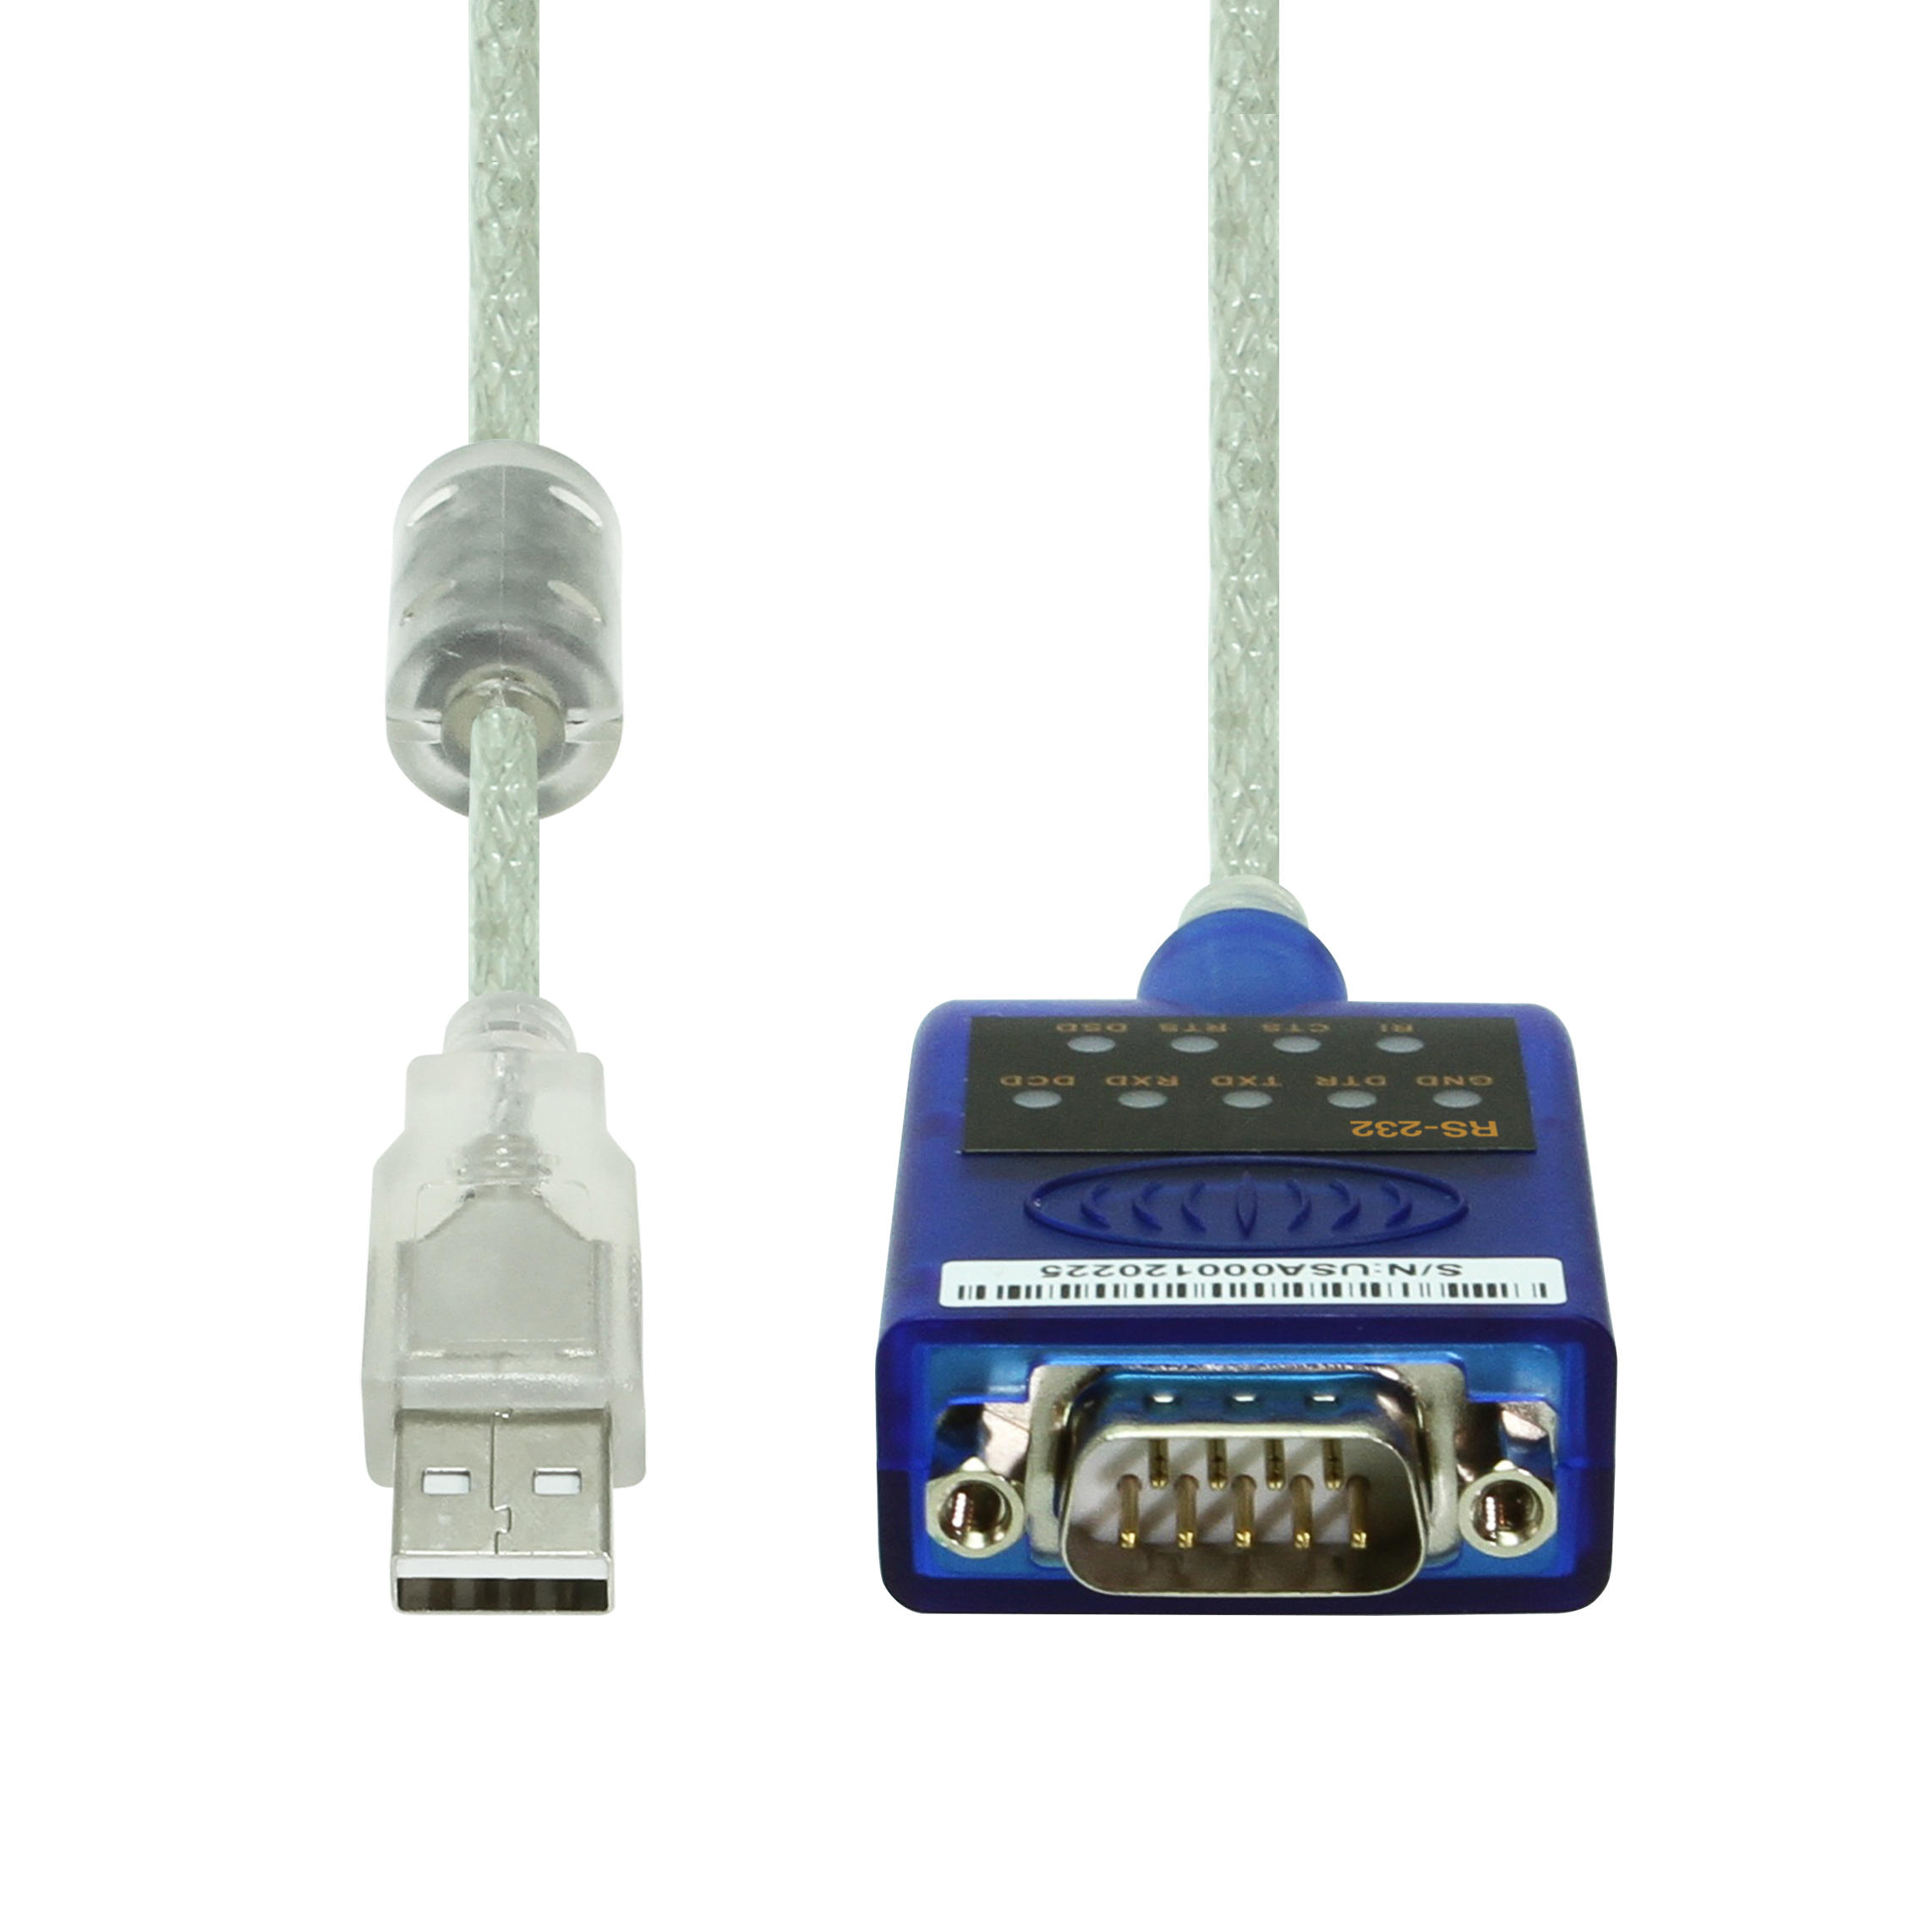 USB RS-232 Serial Adapter With LED Indicators | eduaspirant.com